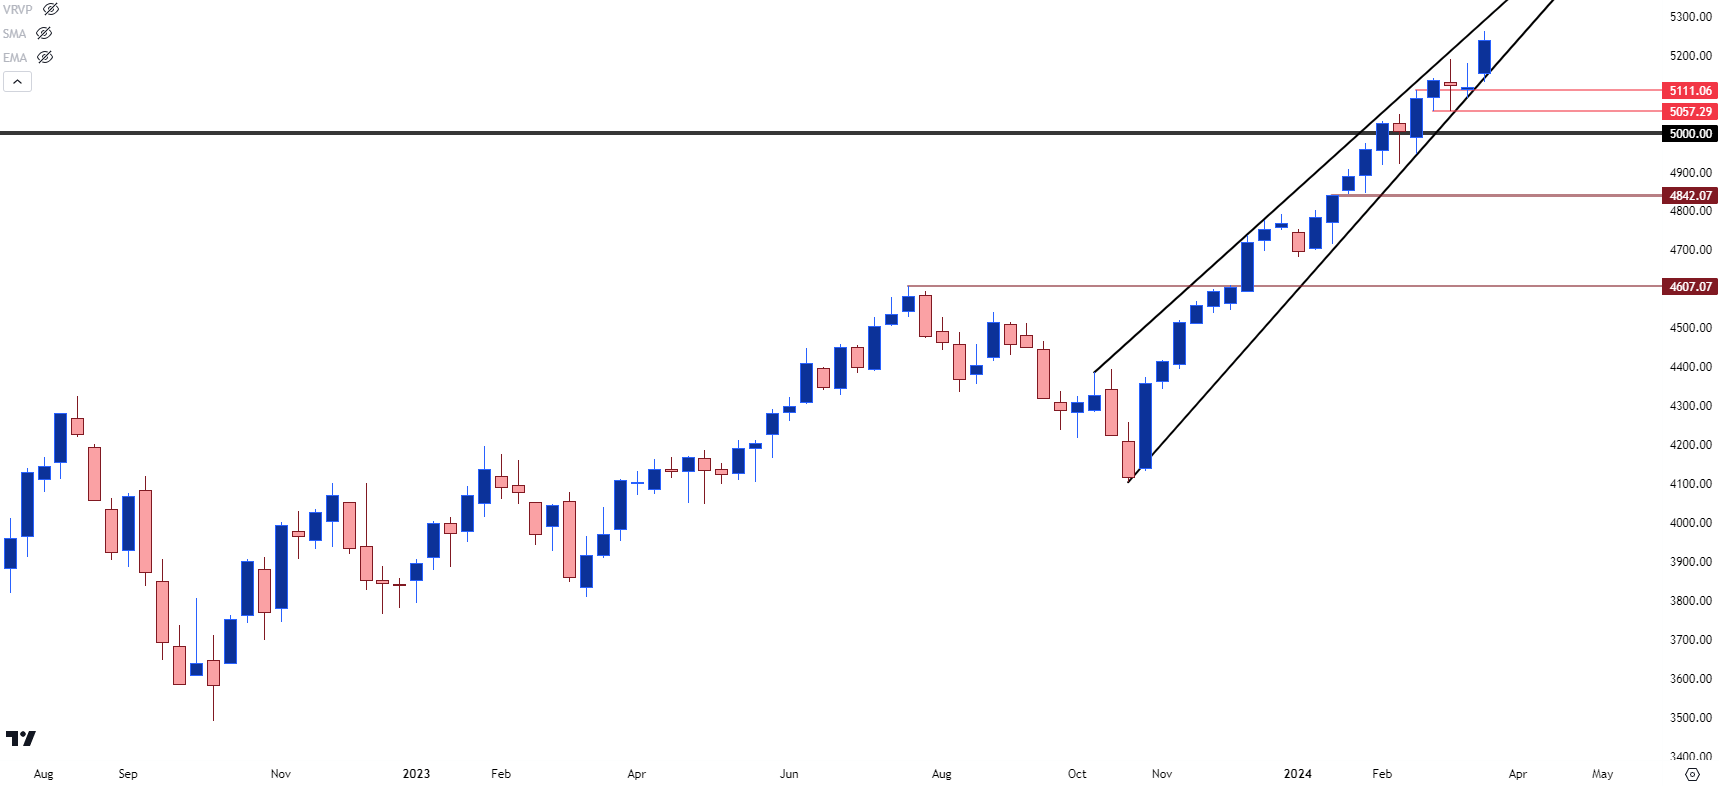 S&P 500 weekly price chart